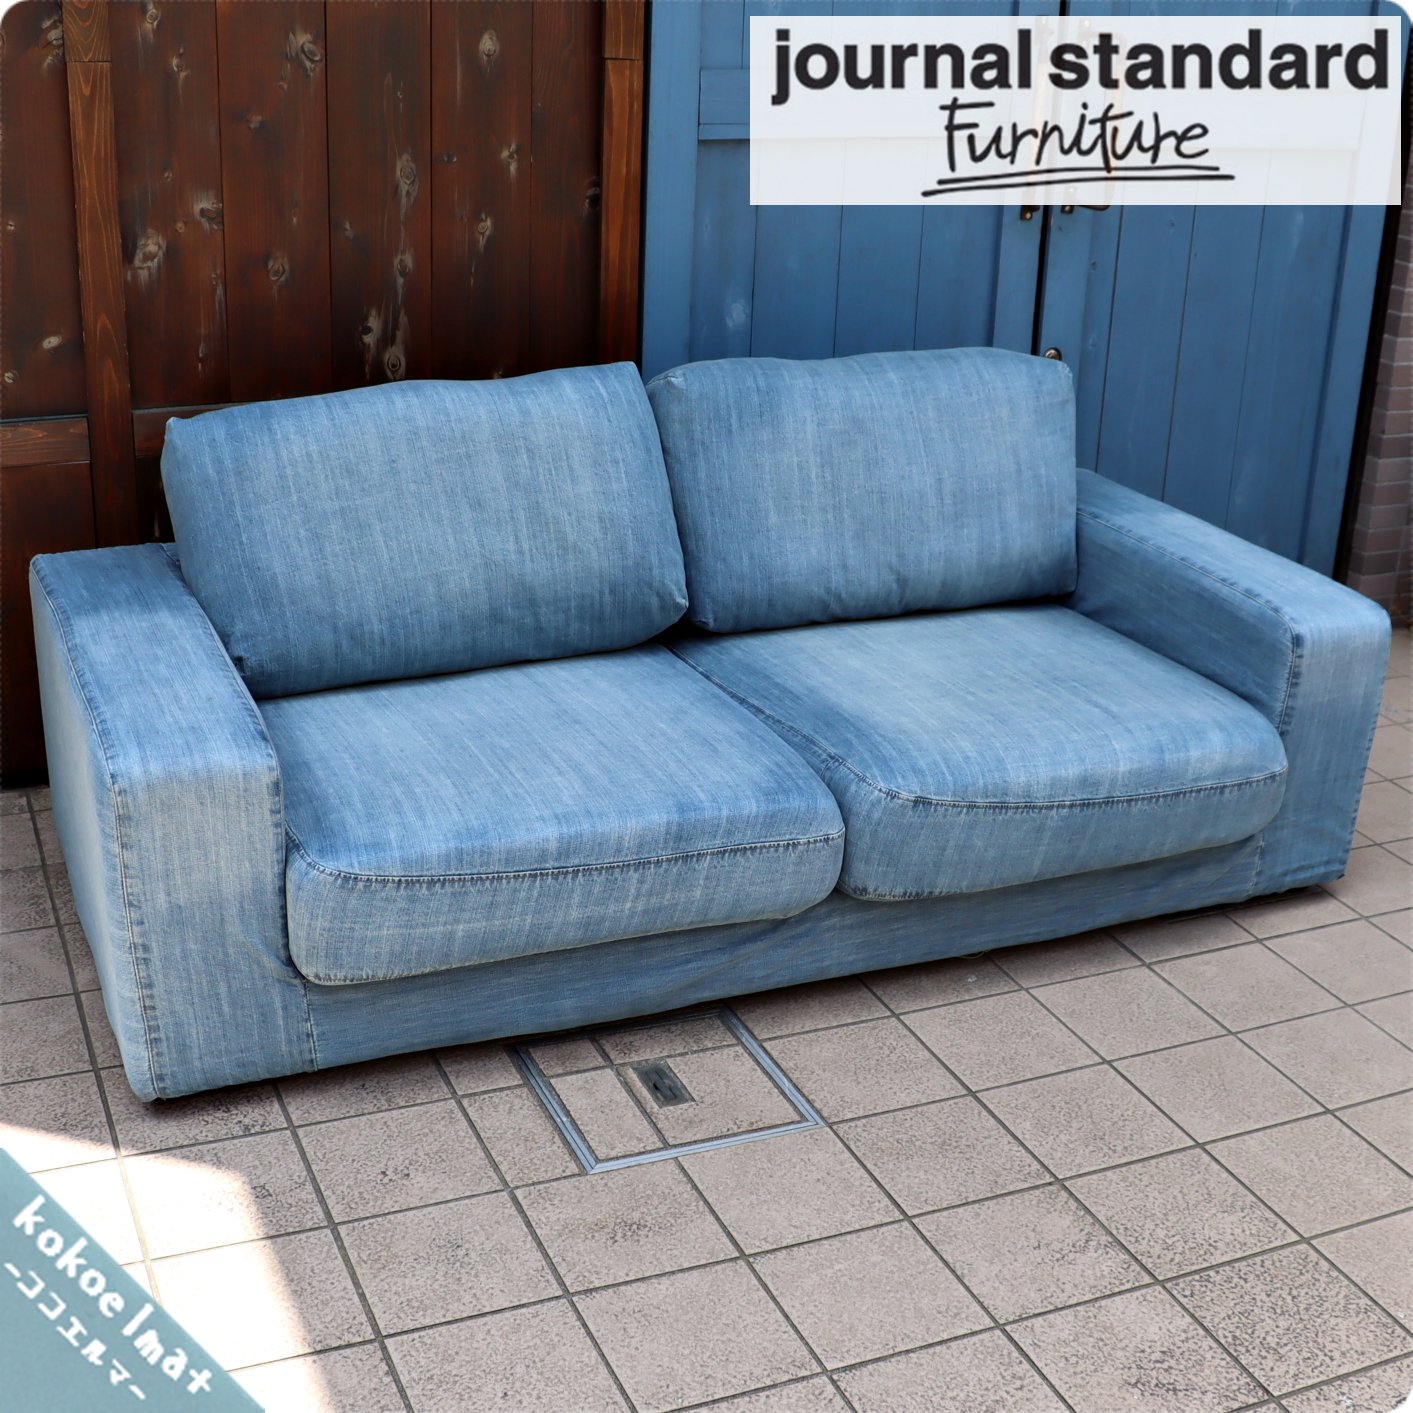 Journal Standard Furniture 2P 加工デニム ソファ | labiela.com